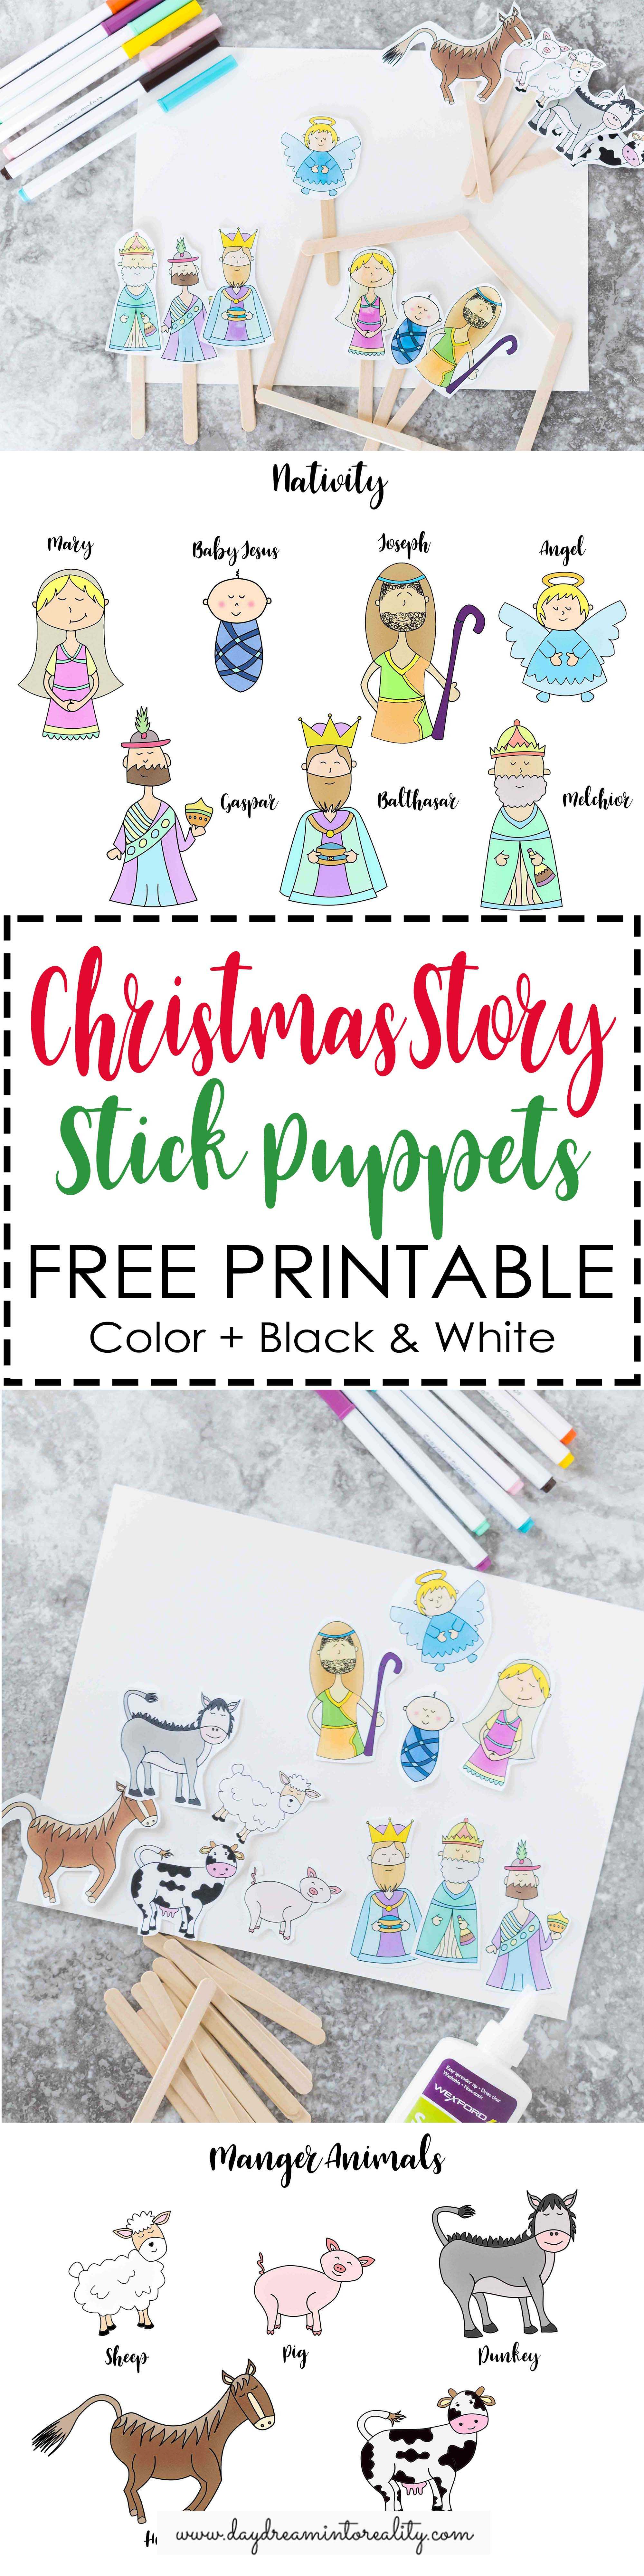 Christmas Story Stick Puppets Free Printable - Free Printable Nativity Story